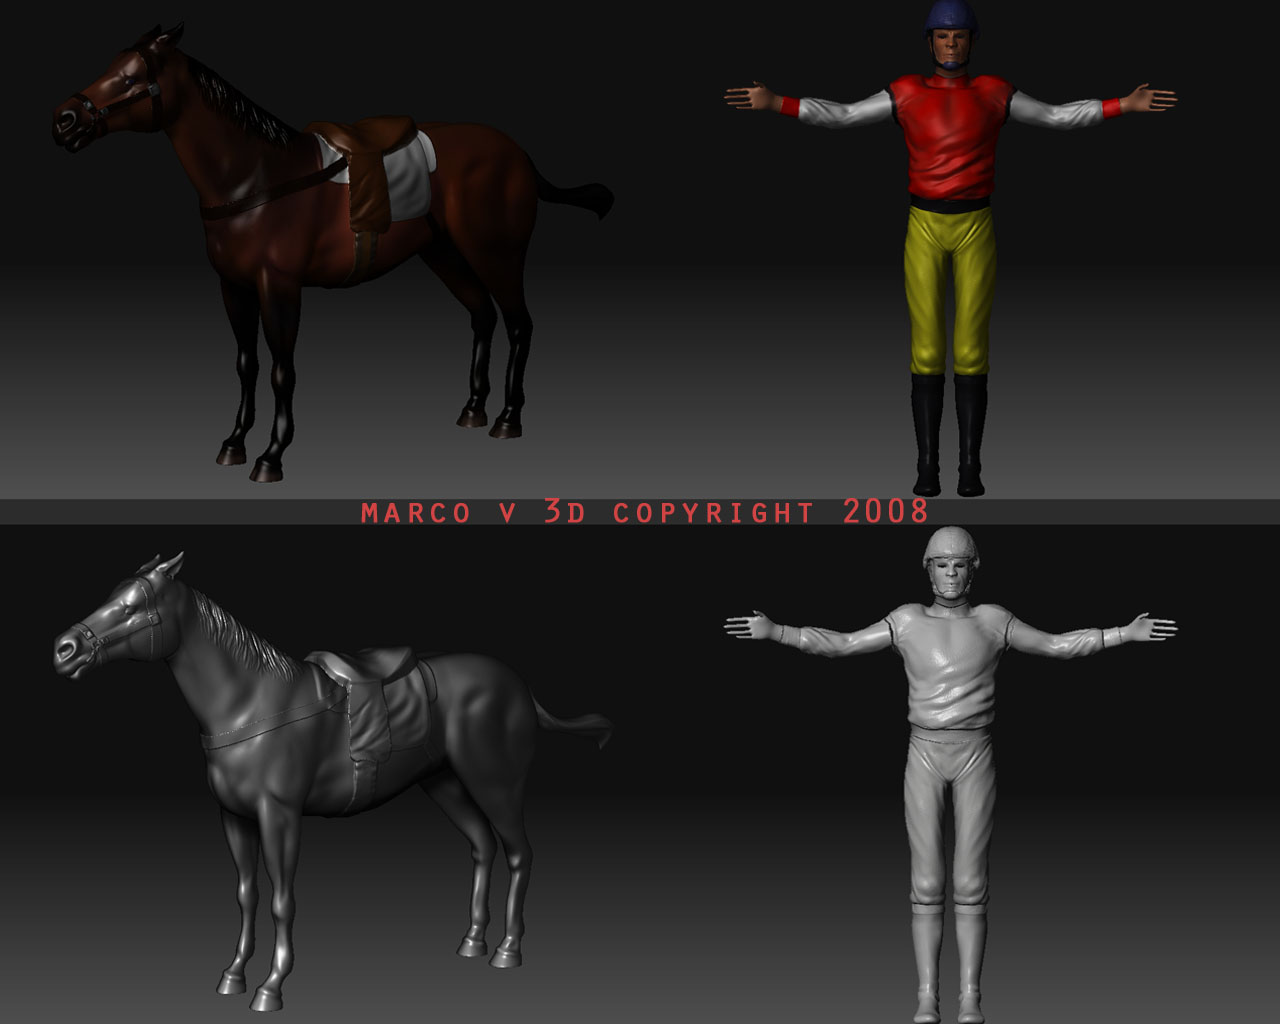 Marco_Valenzuela_Horse_Jockey.jpg